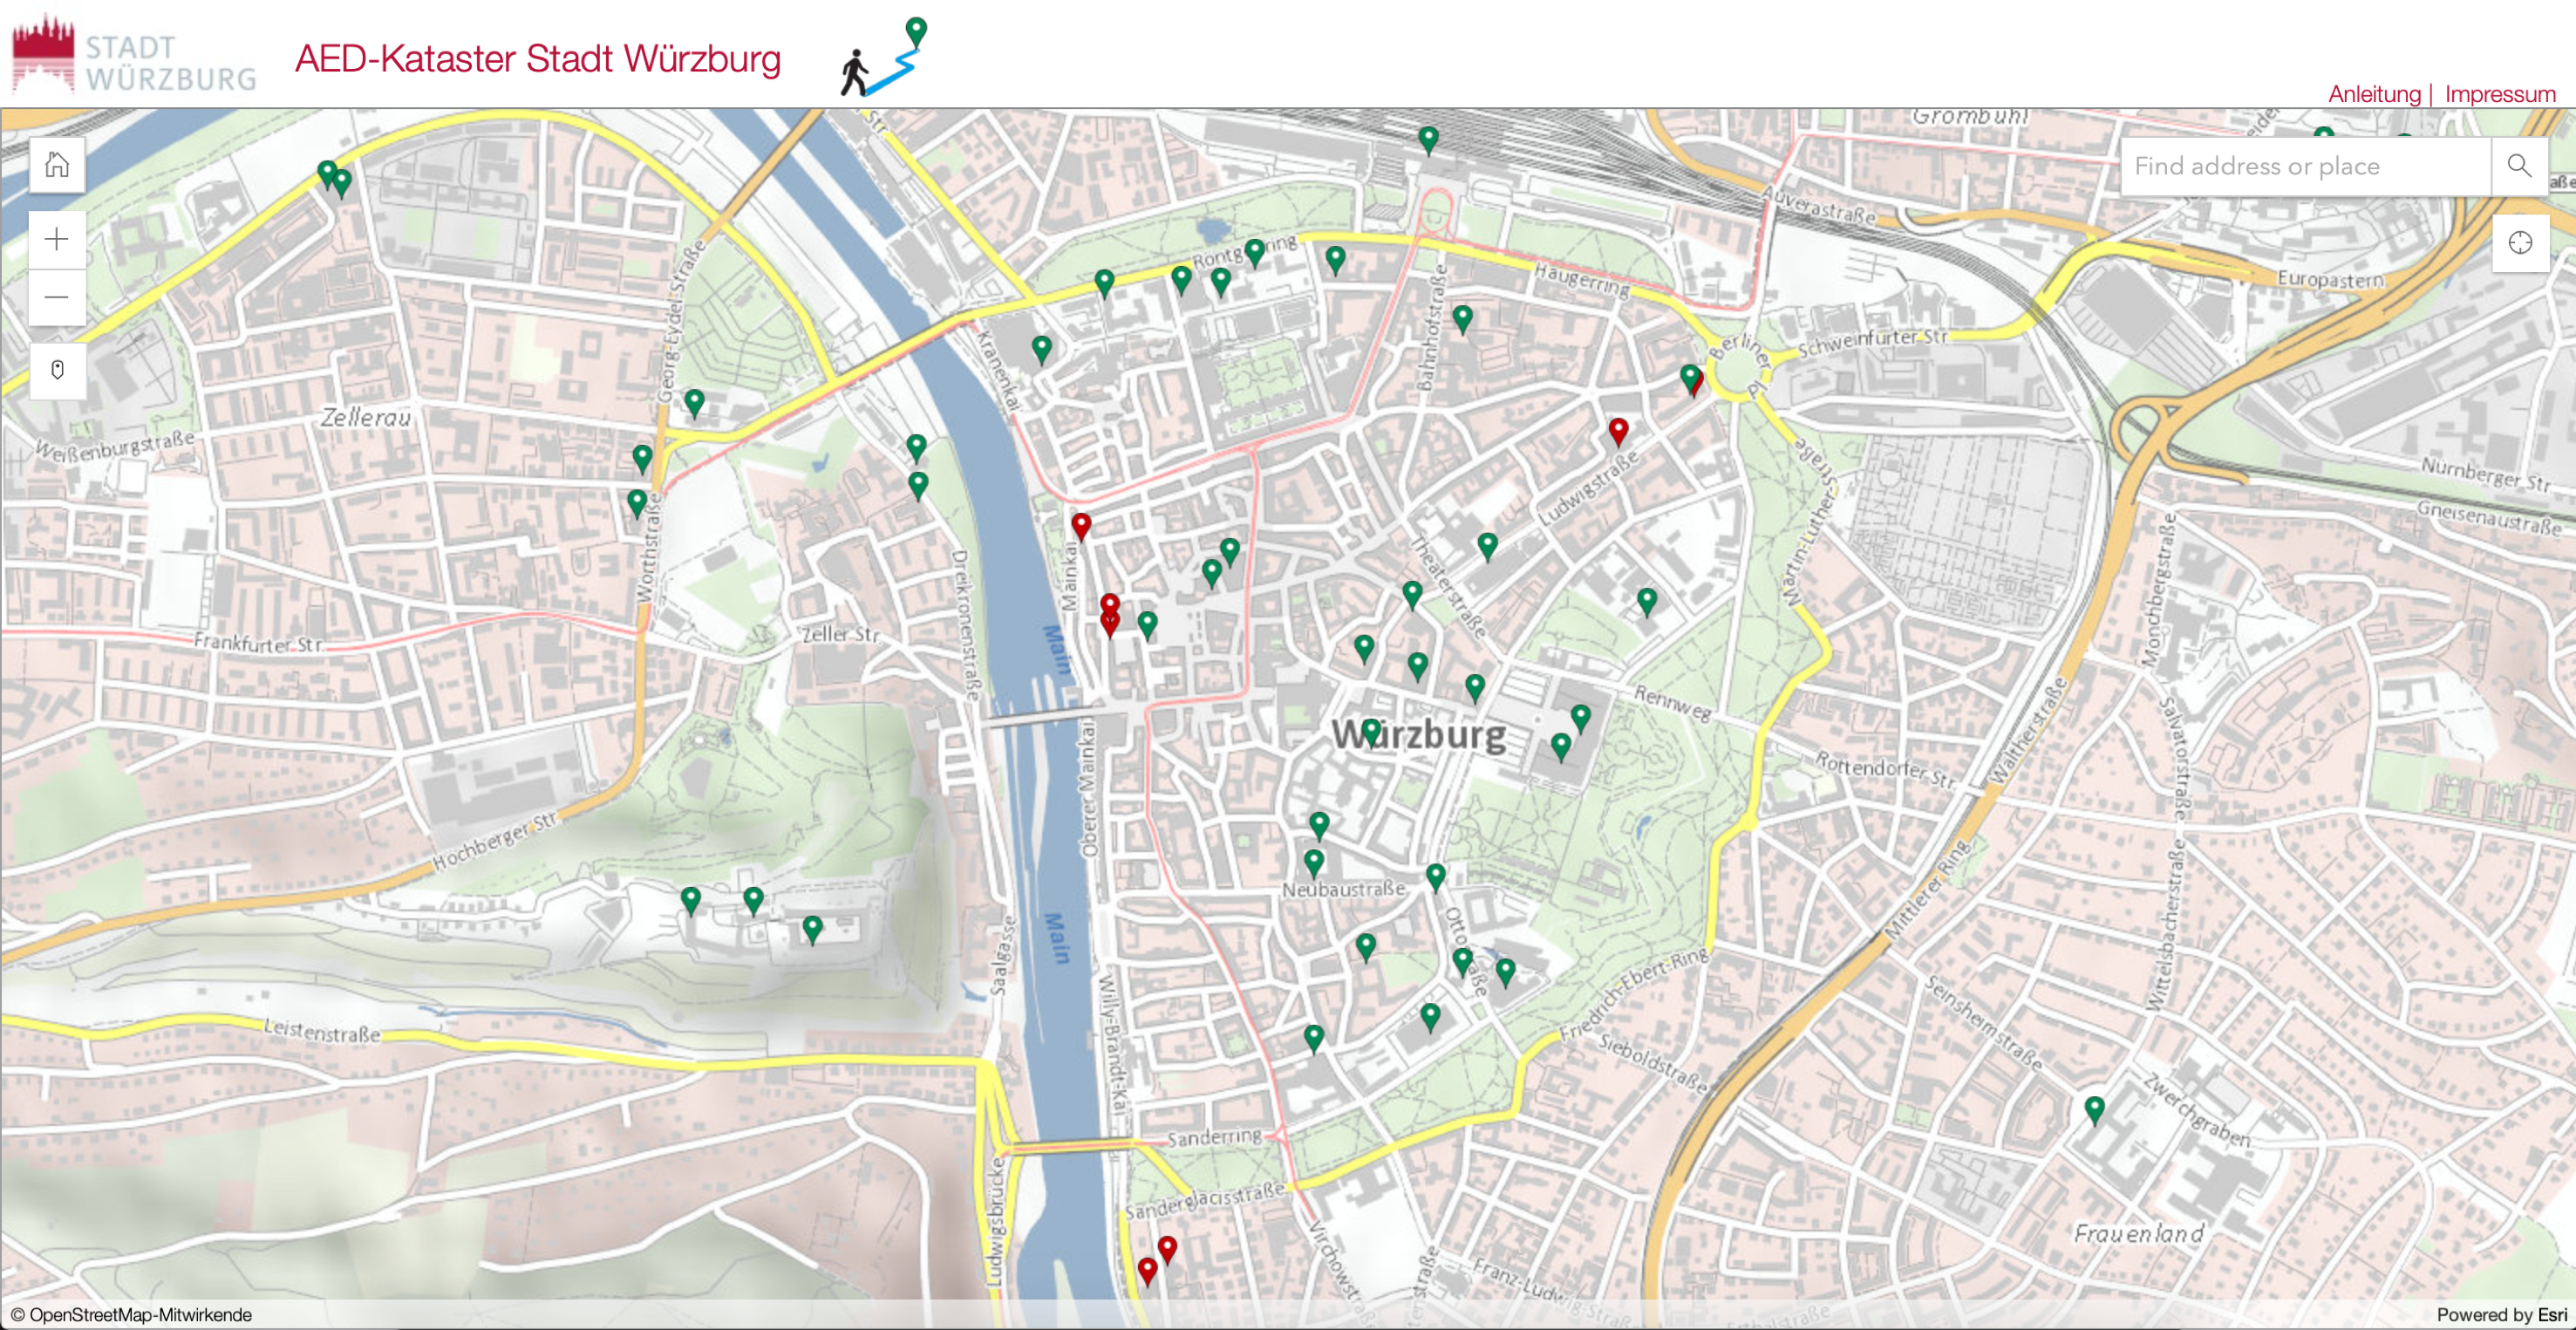 Nicki Weimert’s web app showing locations of defibrillators in the city of Würzburg